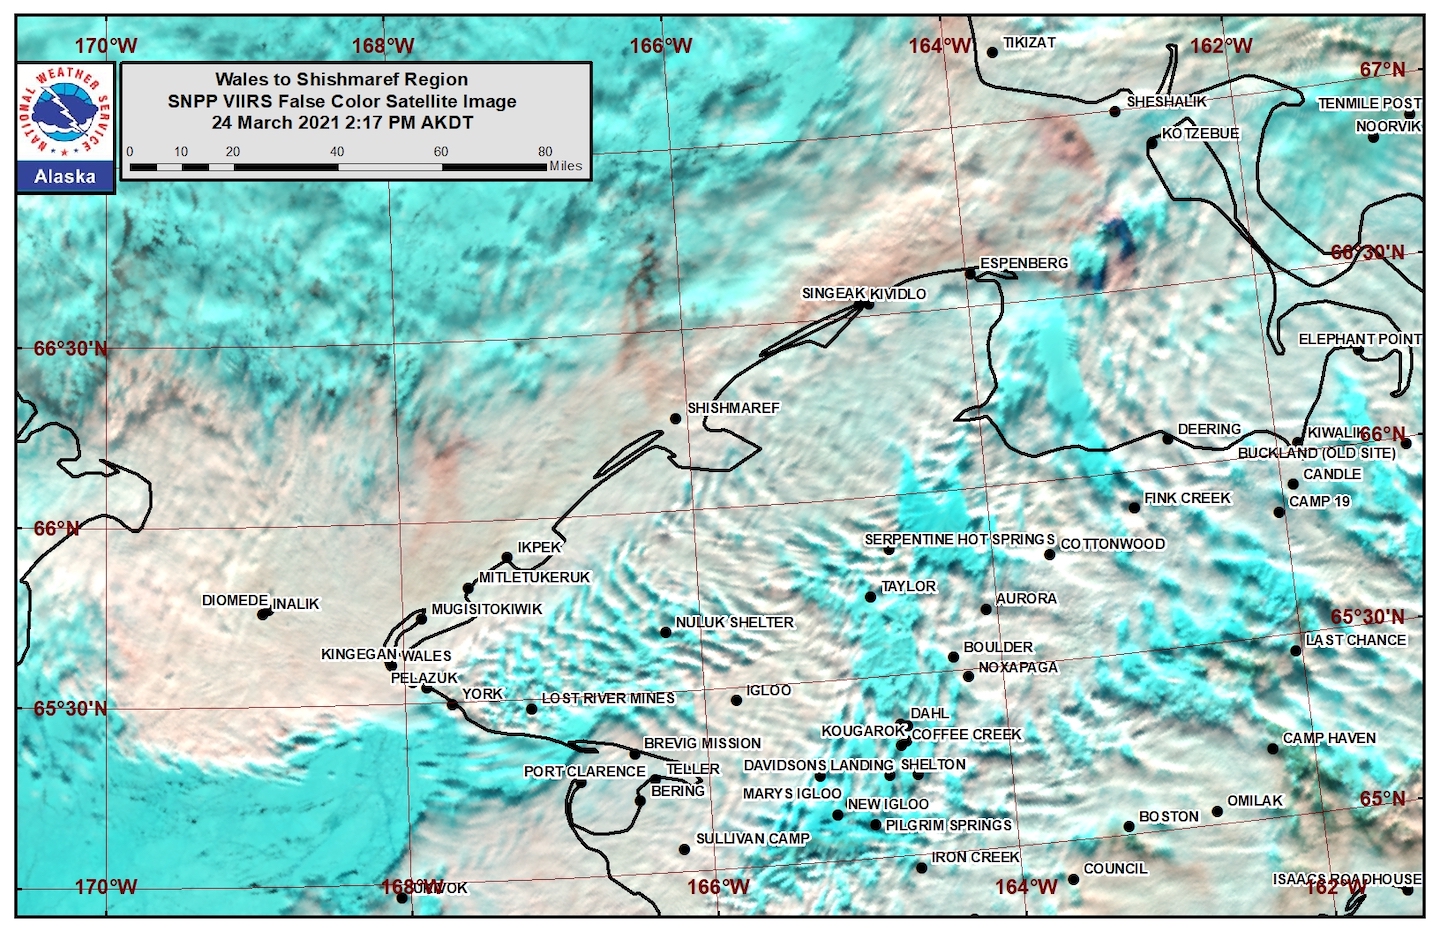 Wales to Shishmaref area satellite image